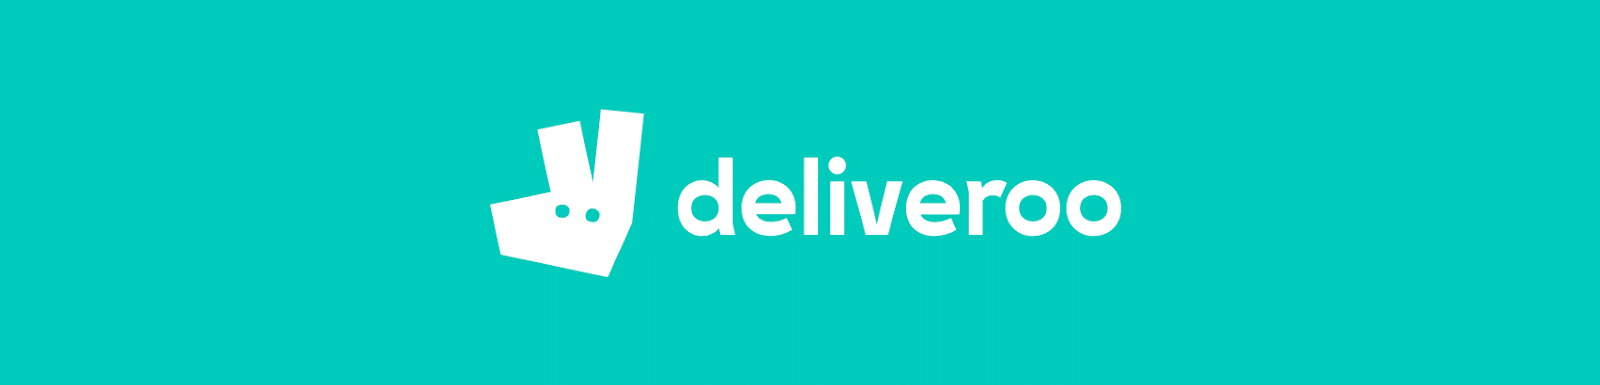 Deliveroo: Blue company logo